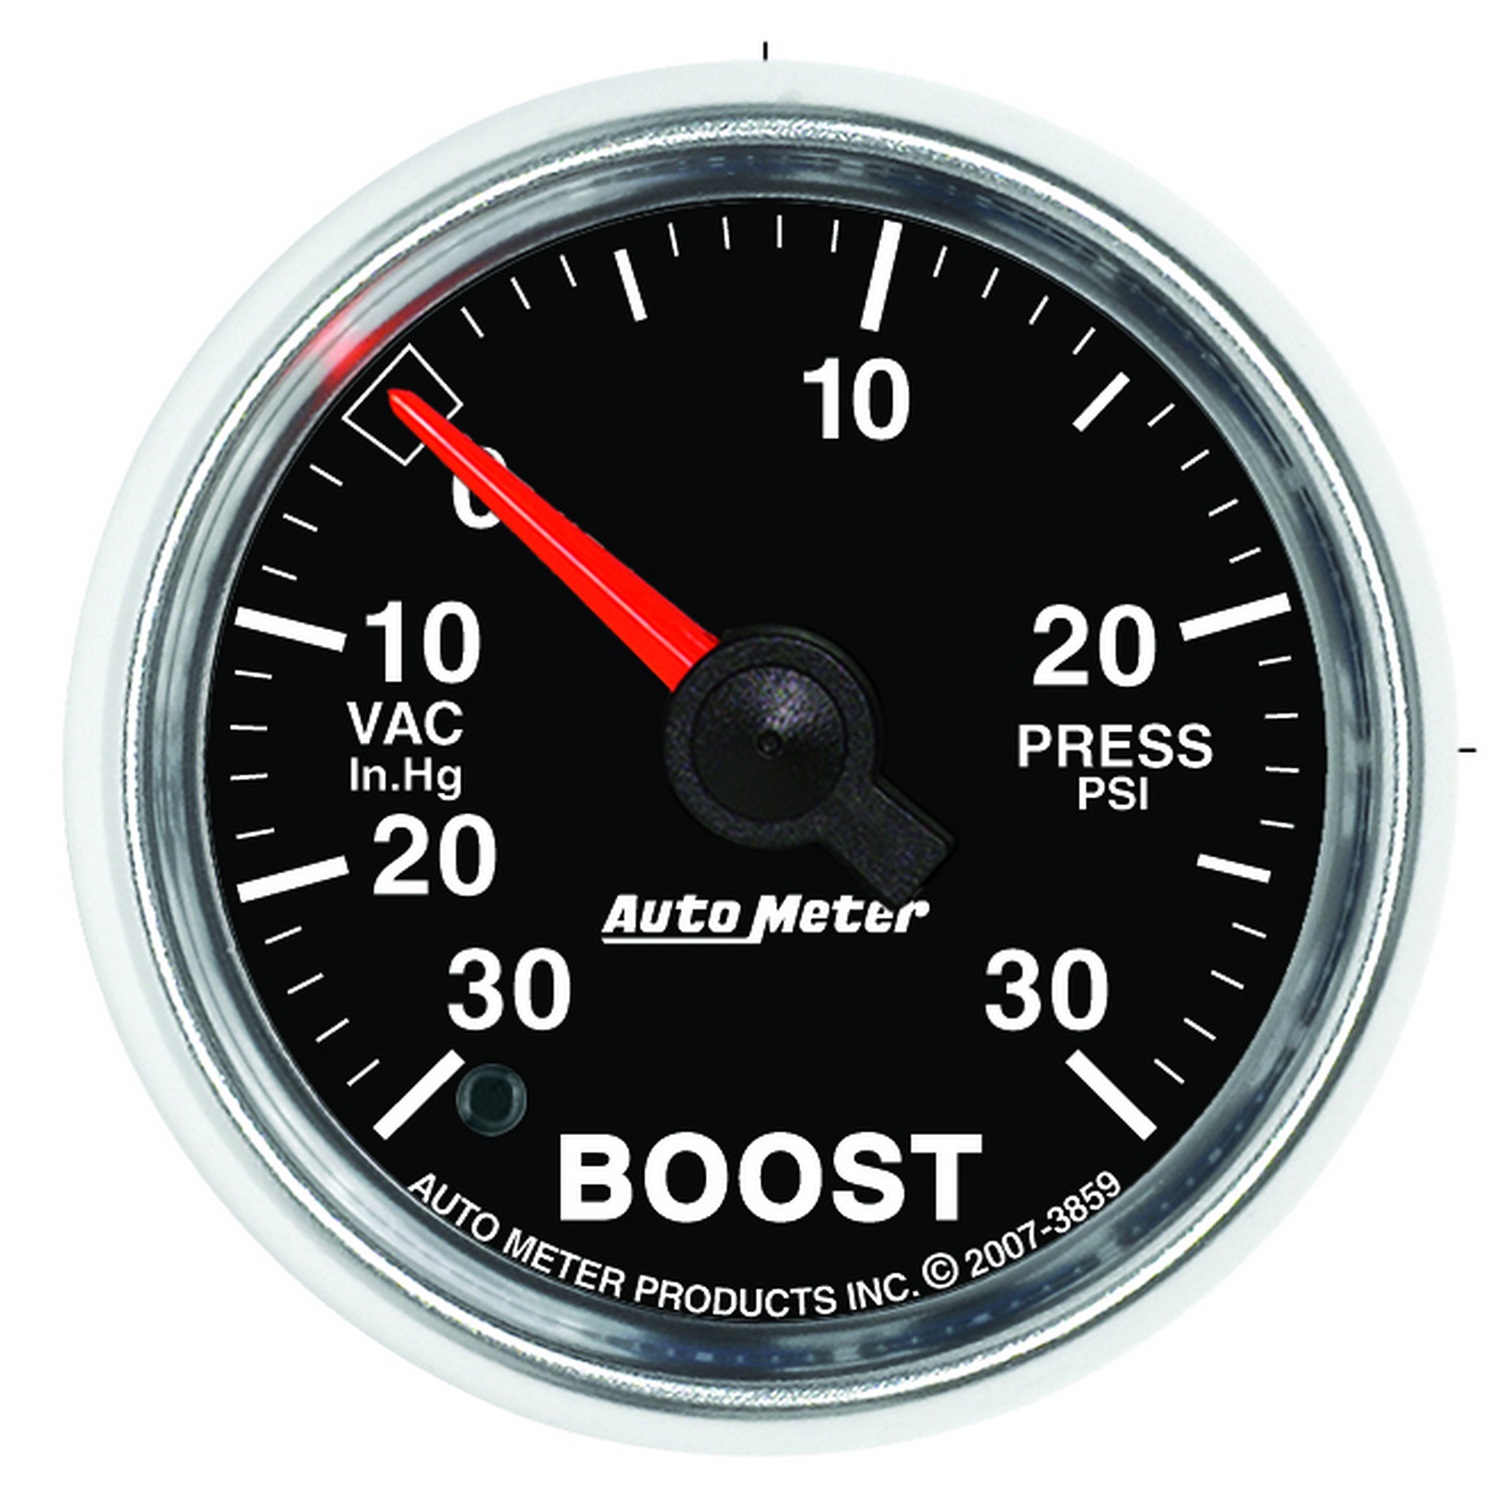 Auto Meter Auto Meter 3859 GS; Electric Boost/Vacuum Gauge